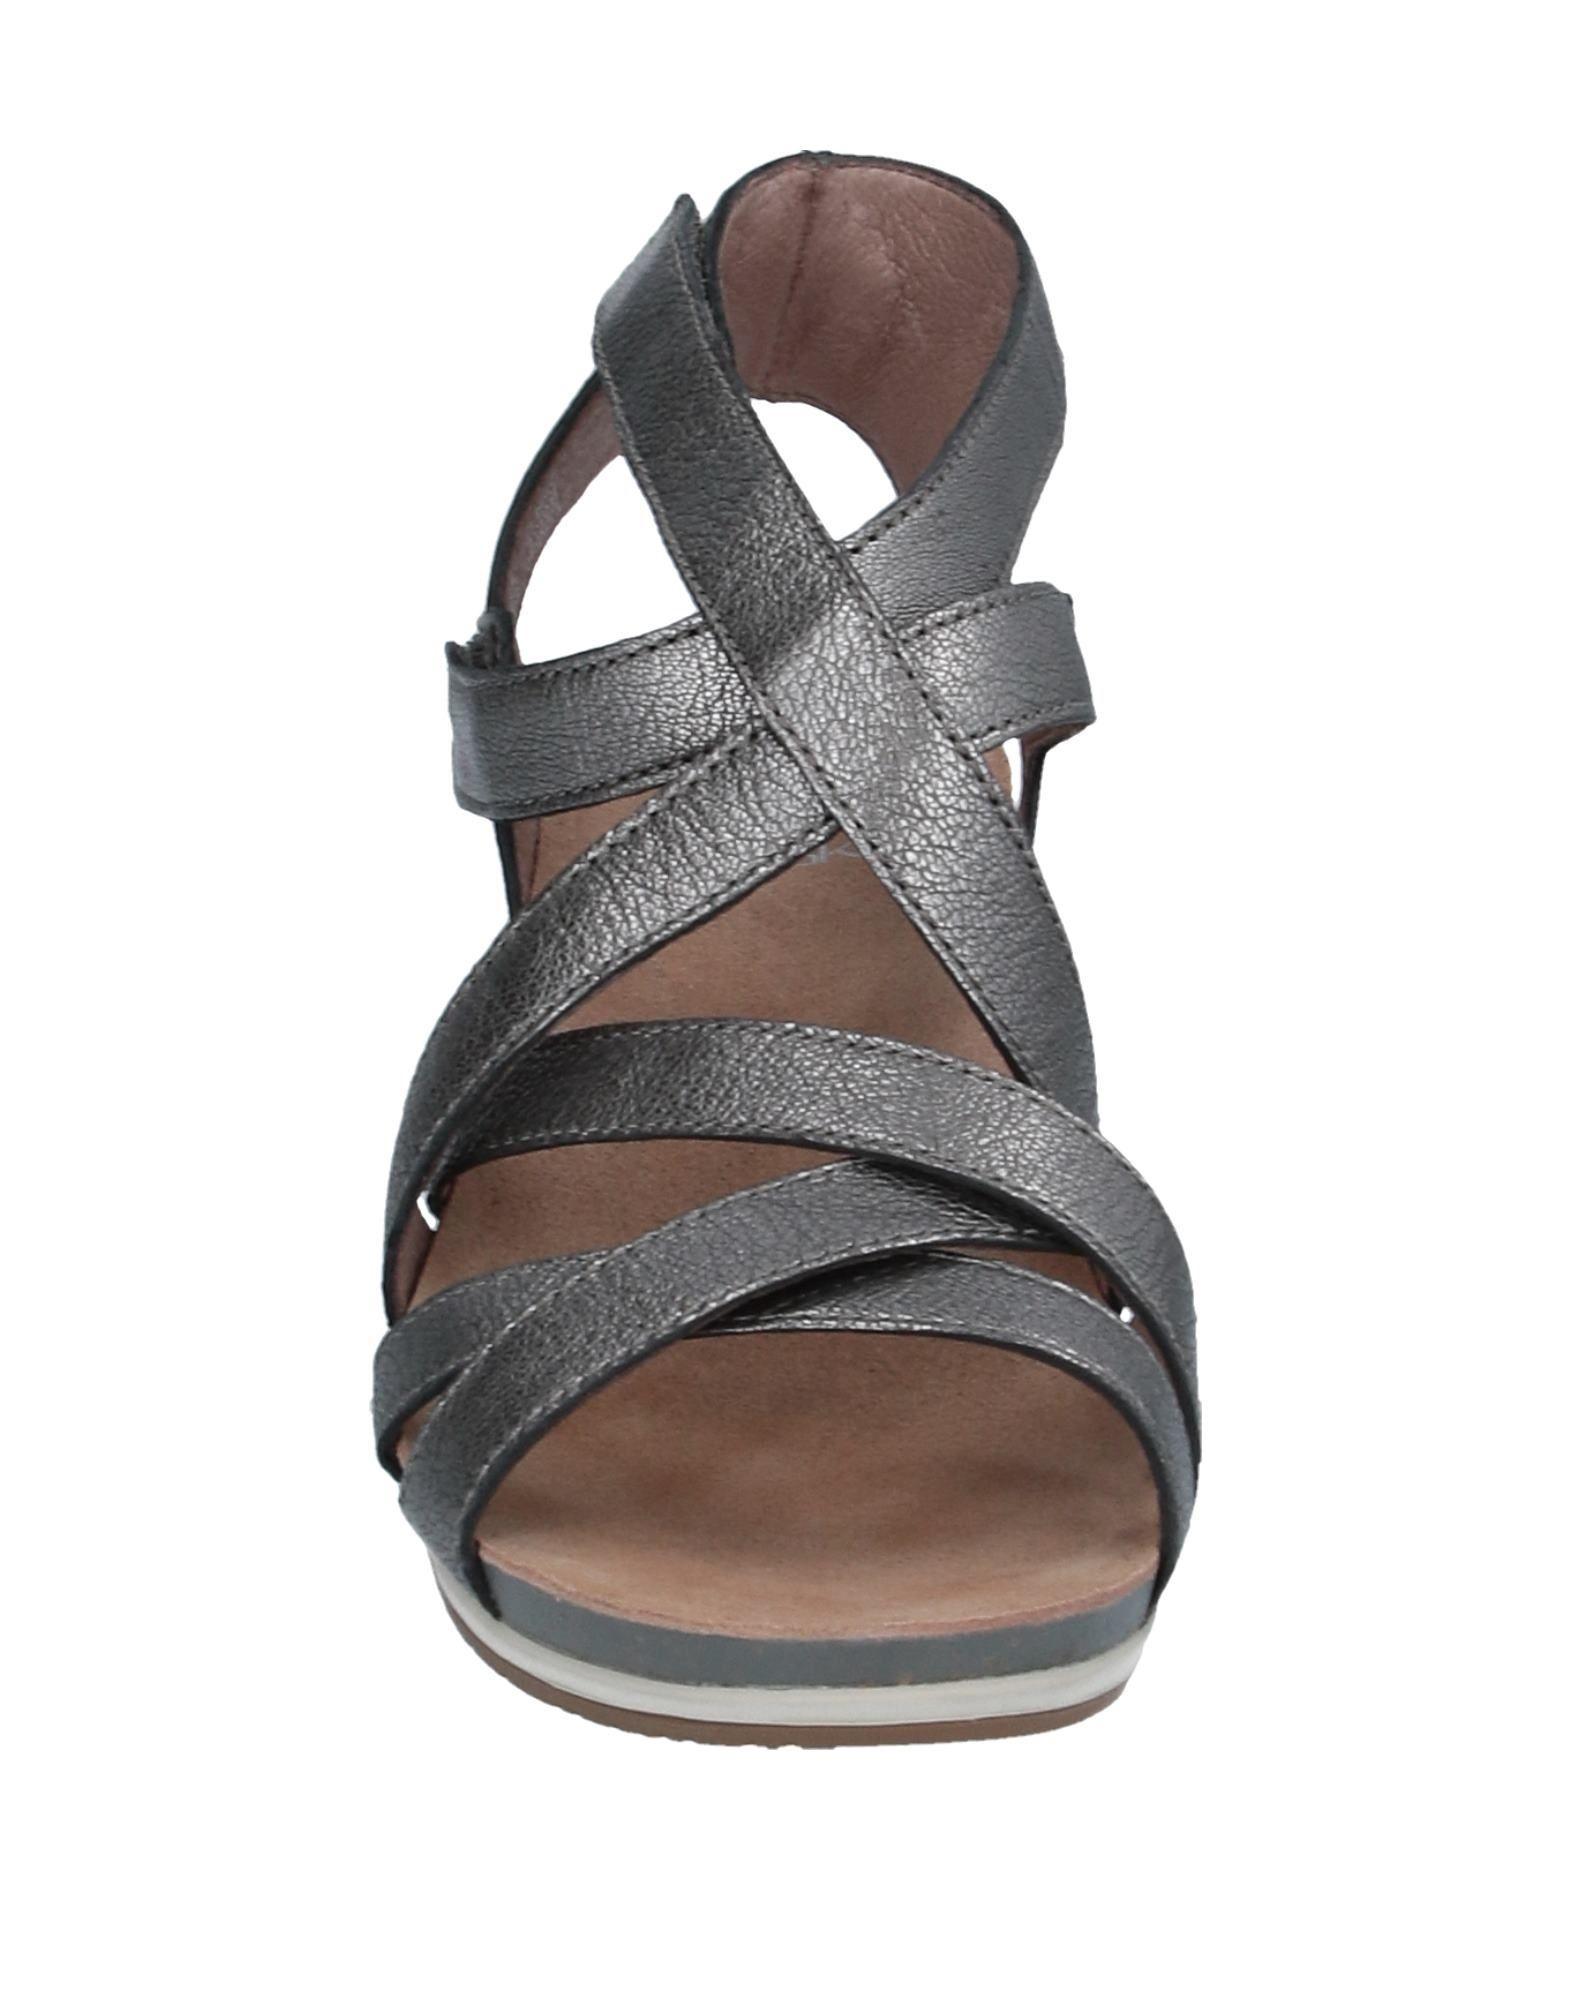 Dansko Leather Sandals in Silver (Metallic) - Lyst